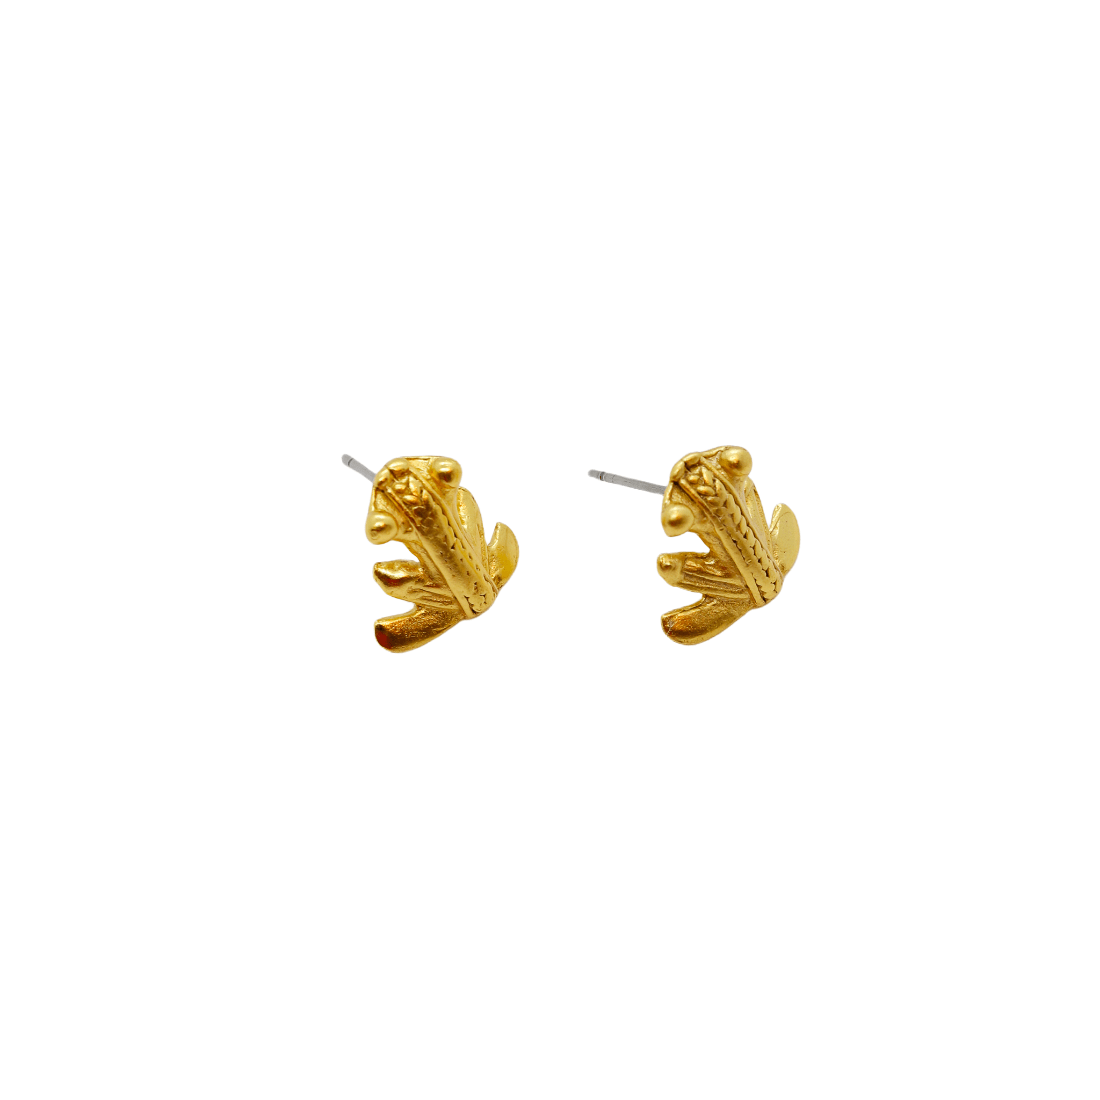 Chiscas Earrings - Origin Colombia